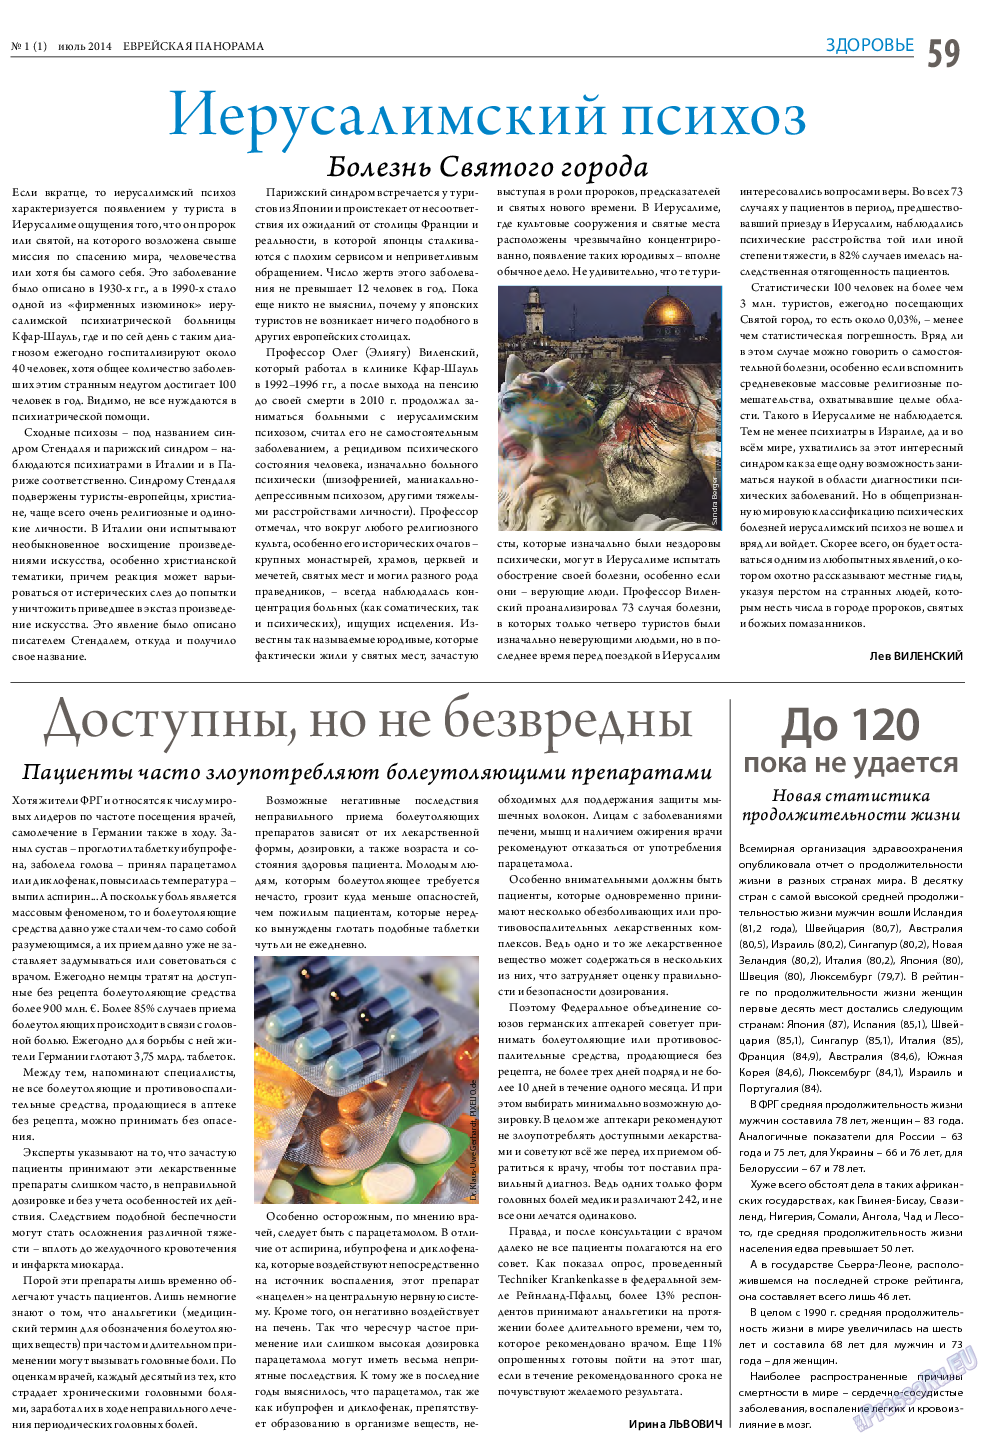 Еврейская панорама, газета. 2014 №1 стр.59